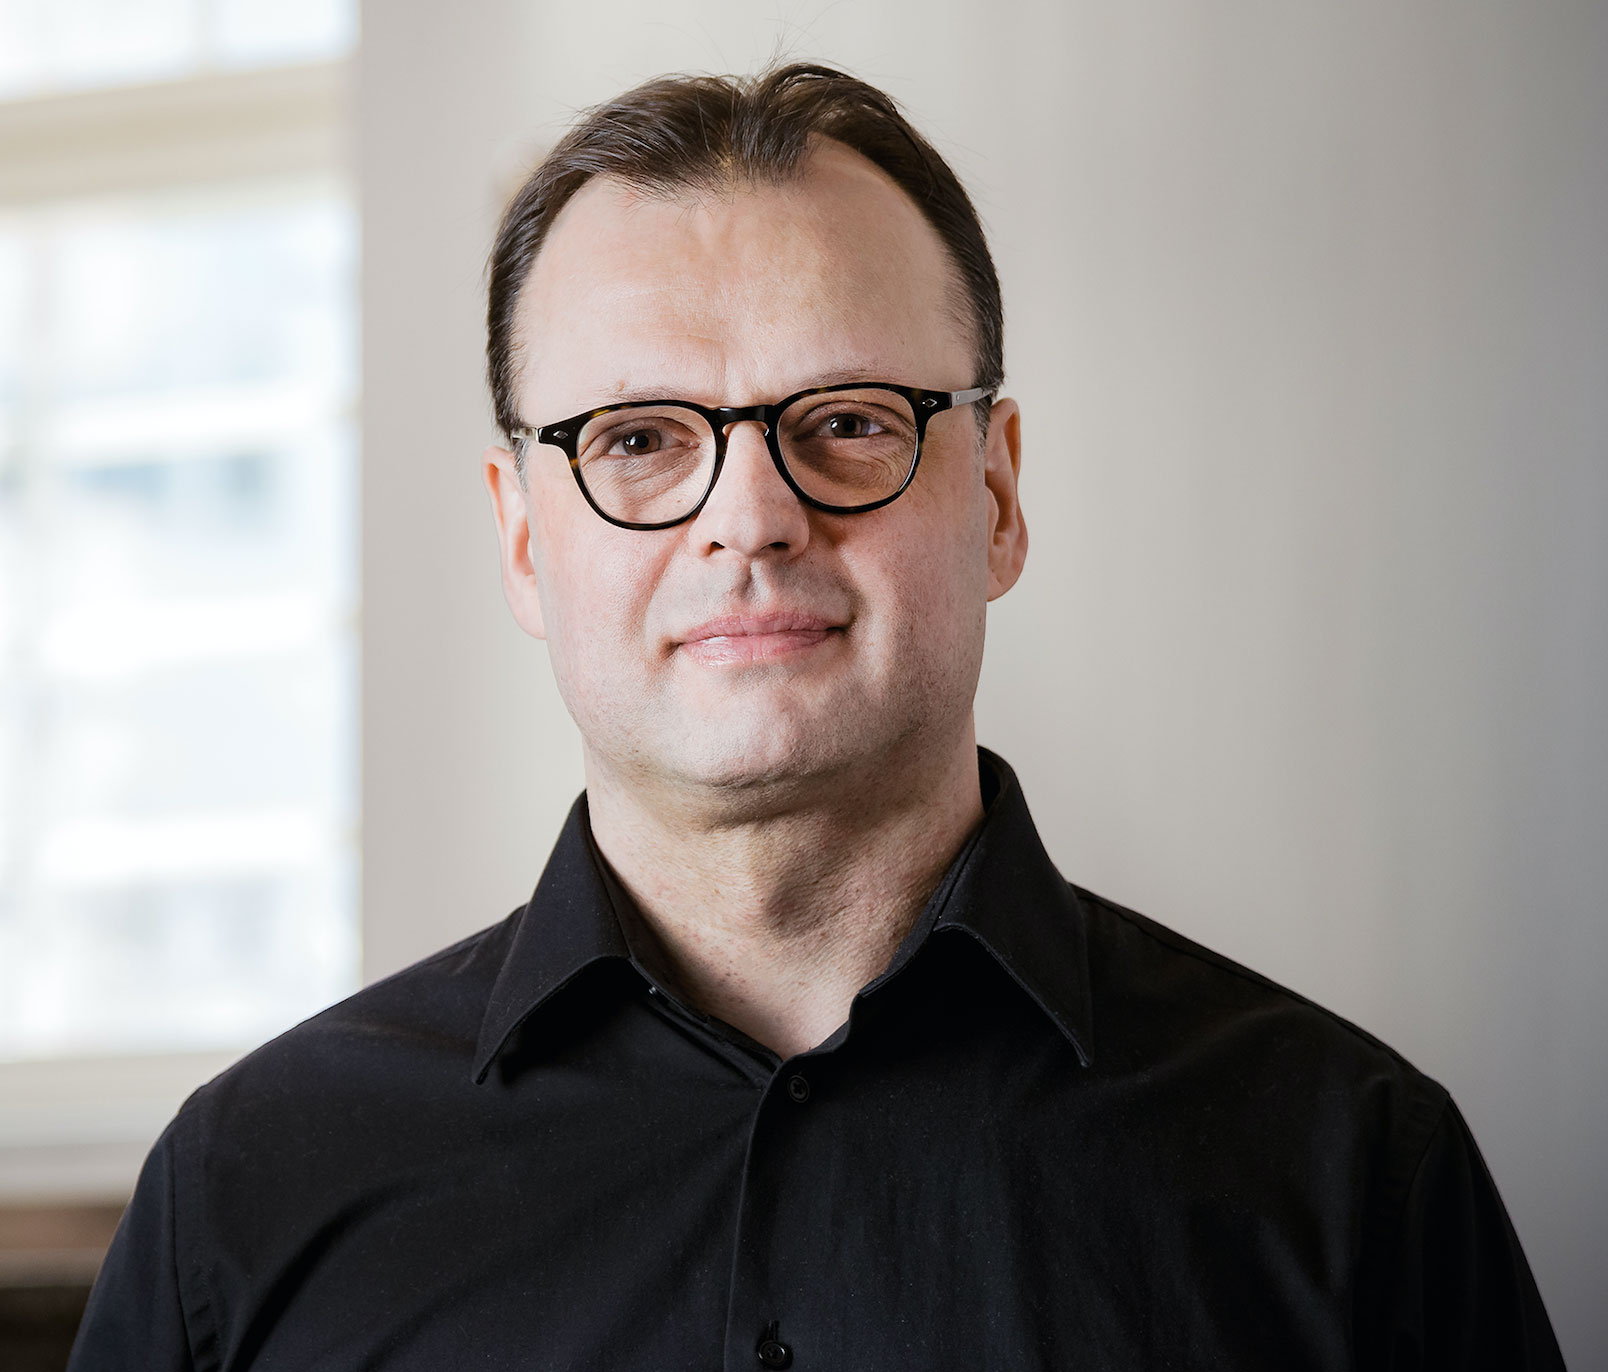 Janne Knuutinen, CEO of Zero Reception